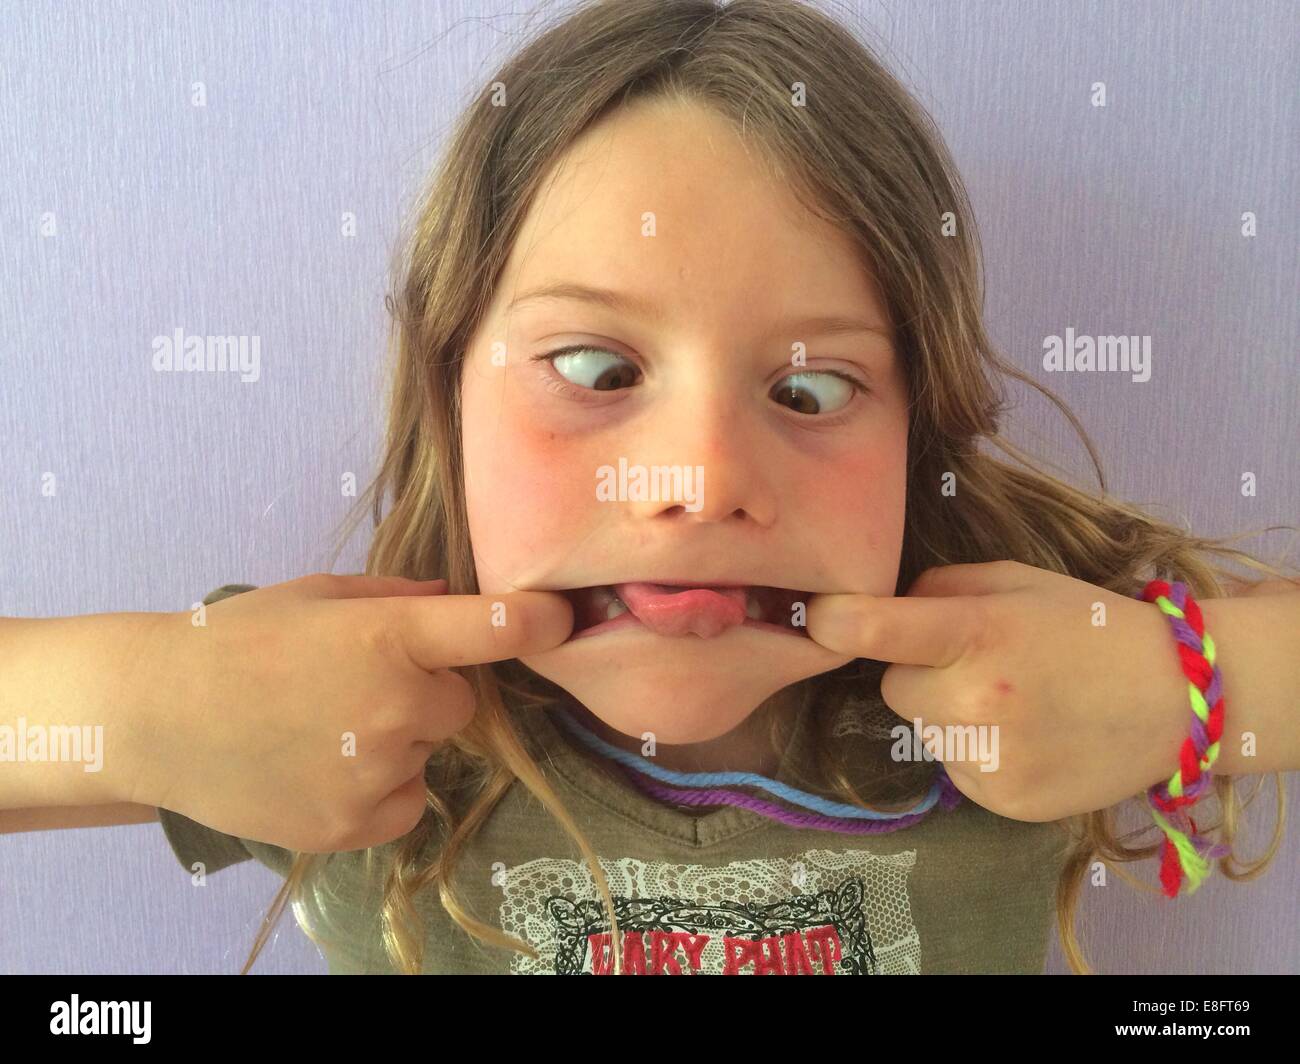 70+ Cross Eyed Teenage Girls Humor Human Face Stock Photos